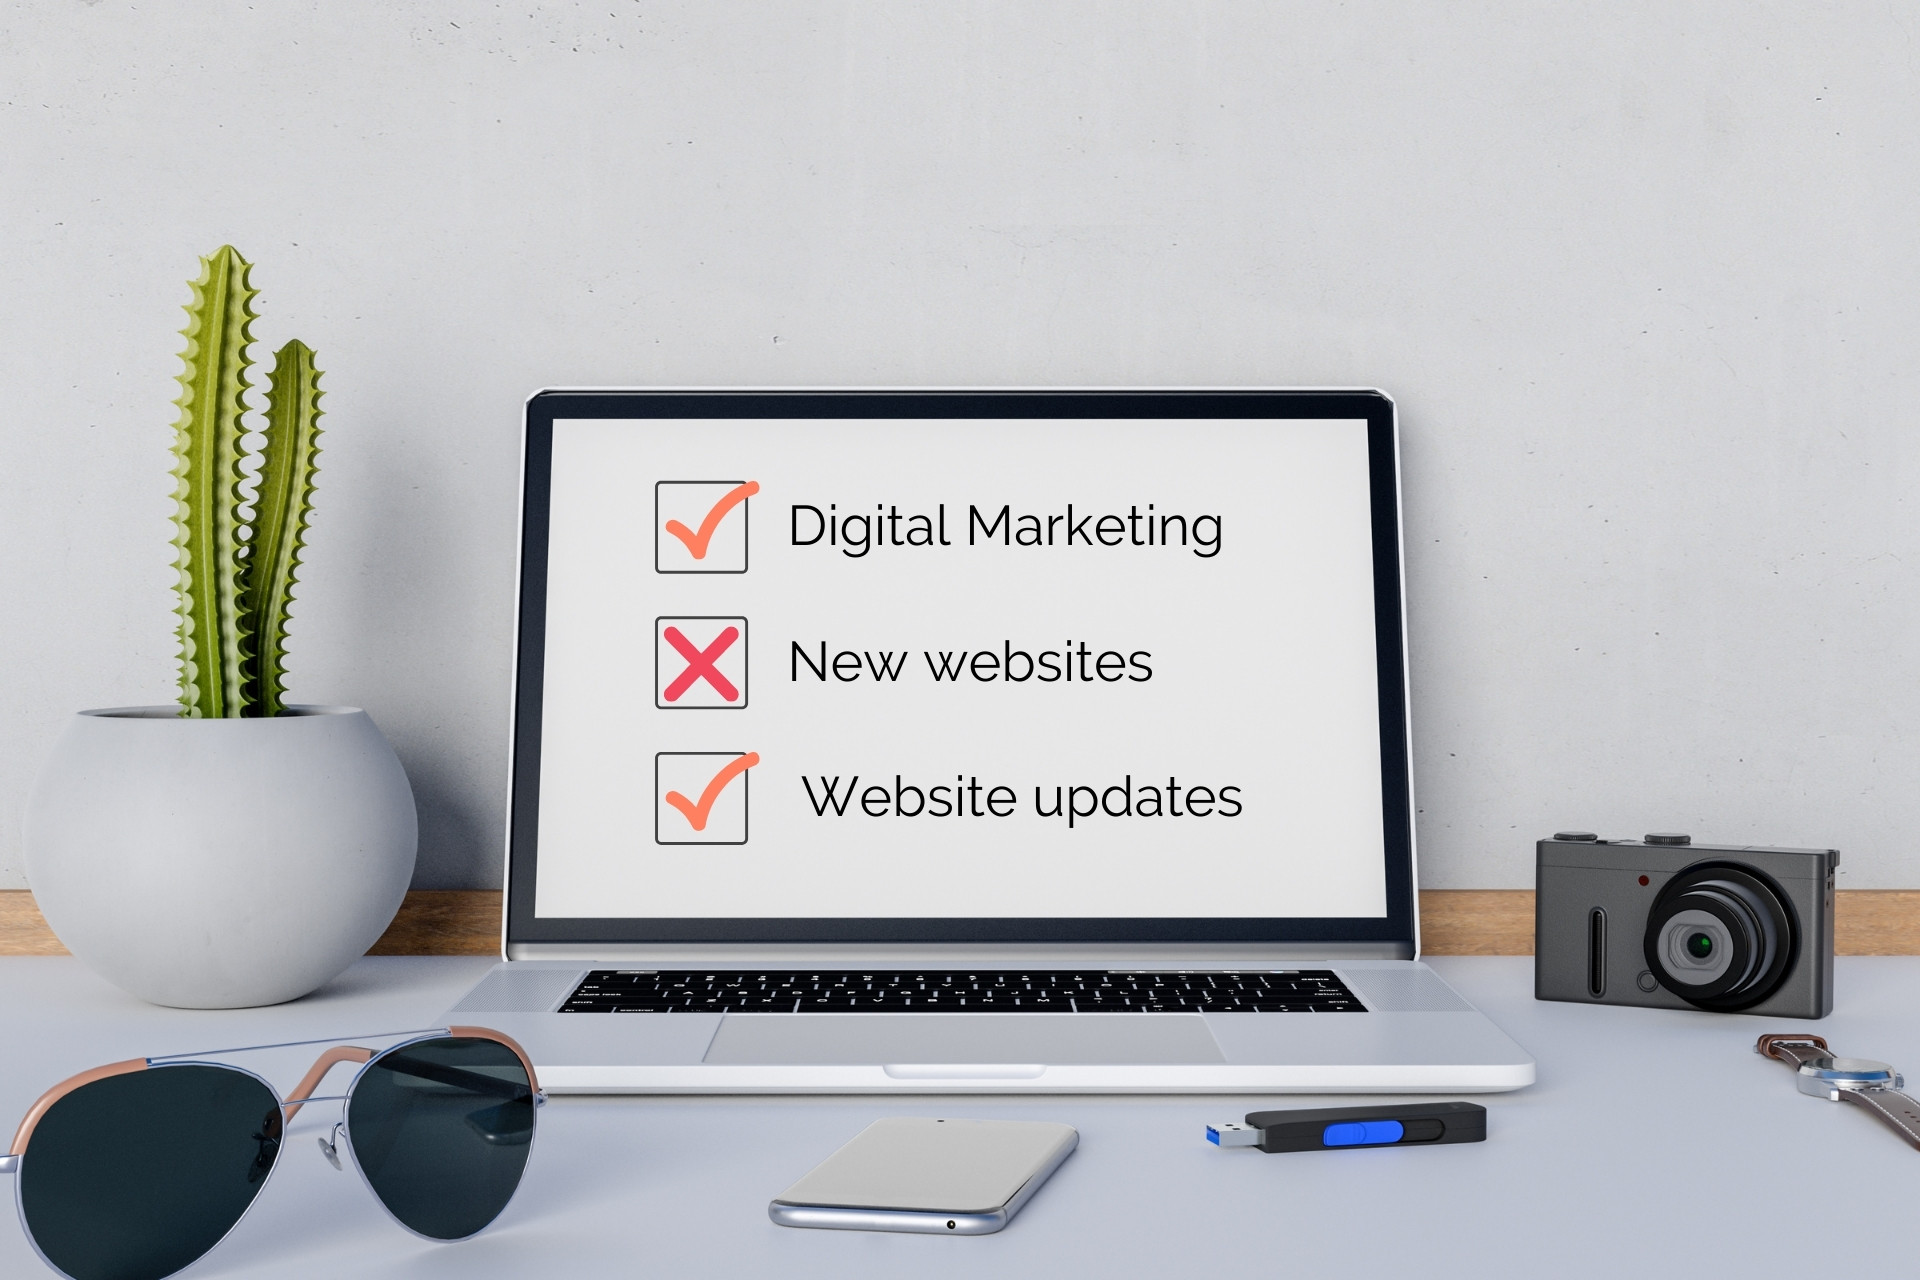 Digital Marketing and website updates